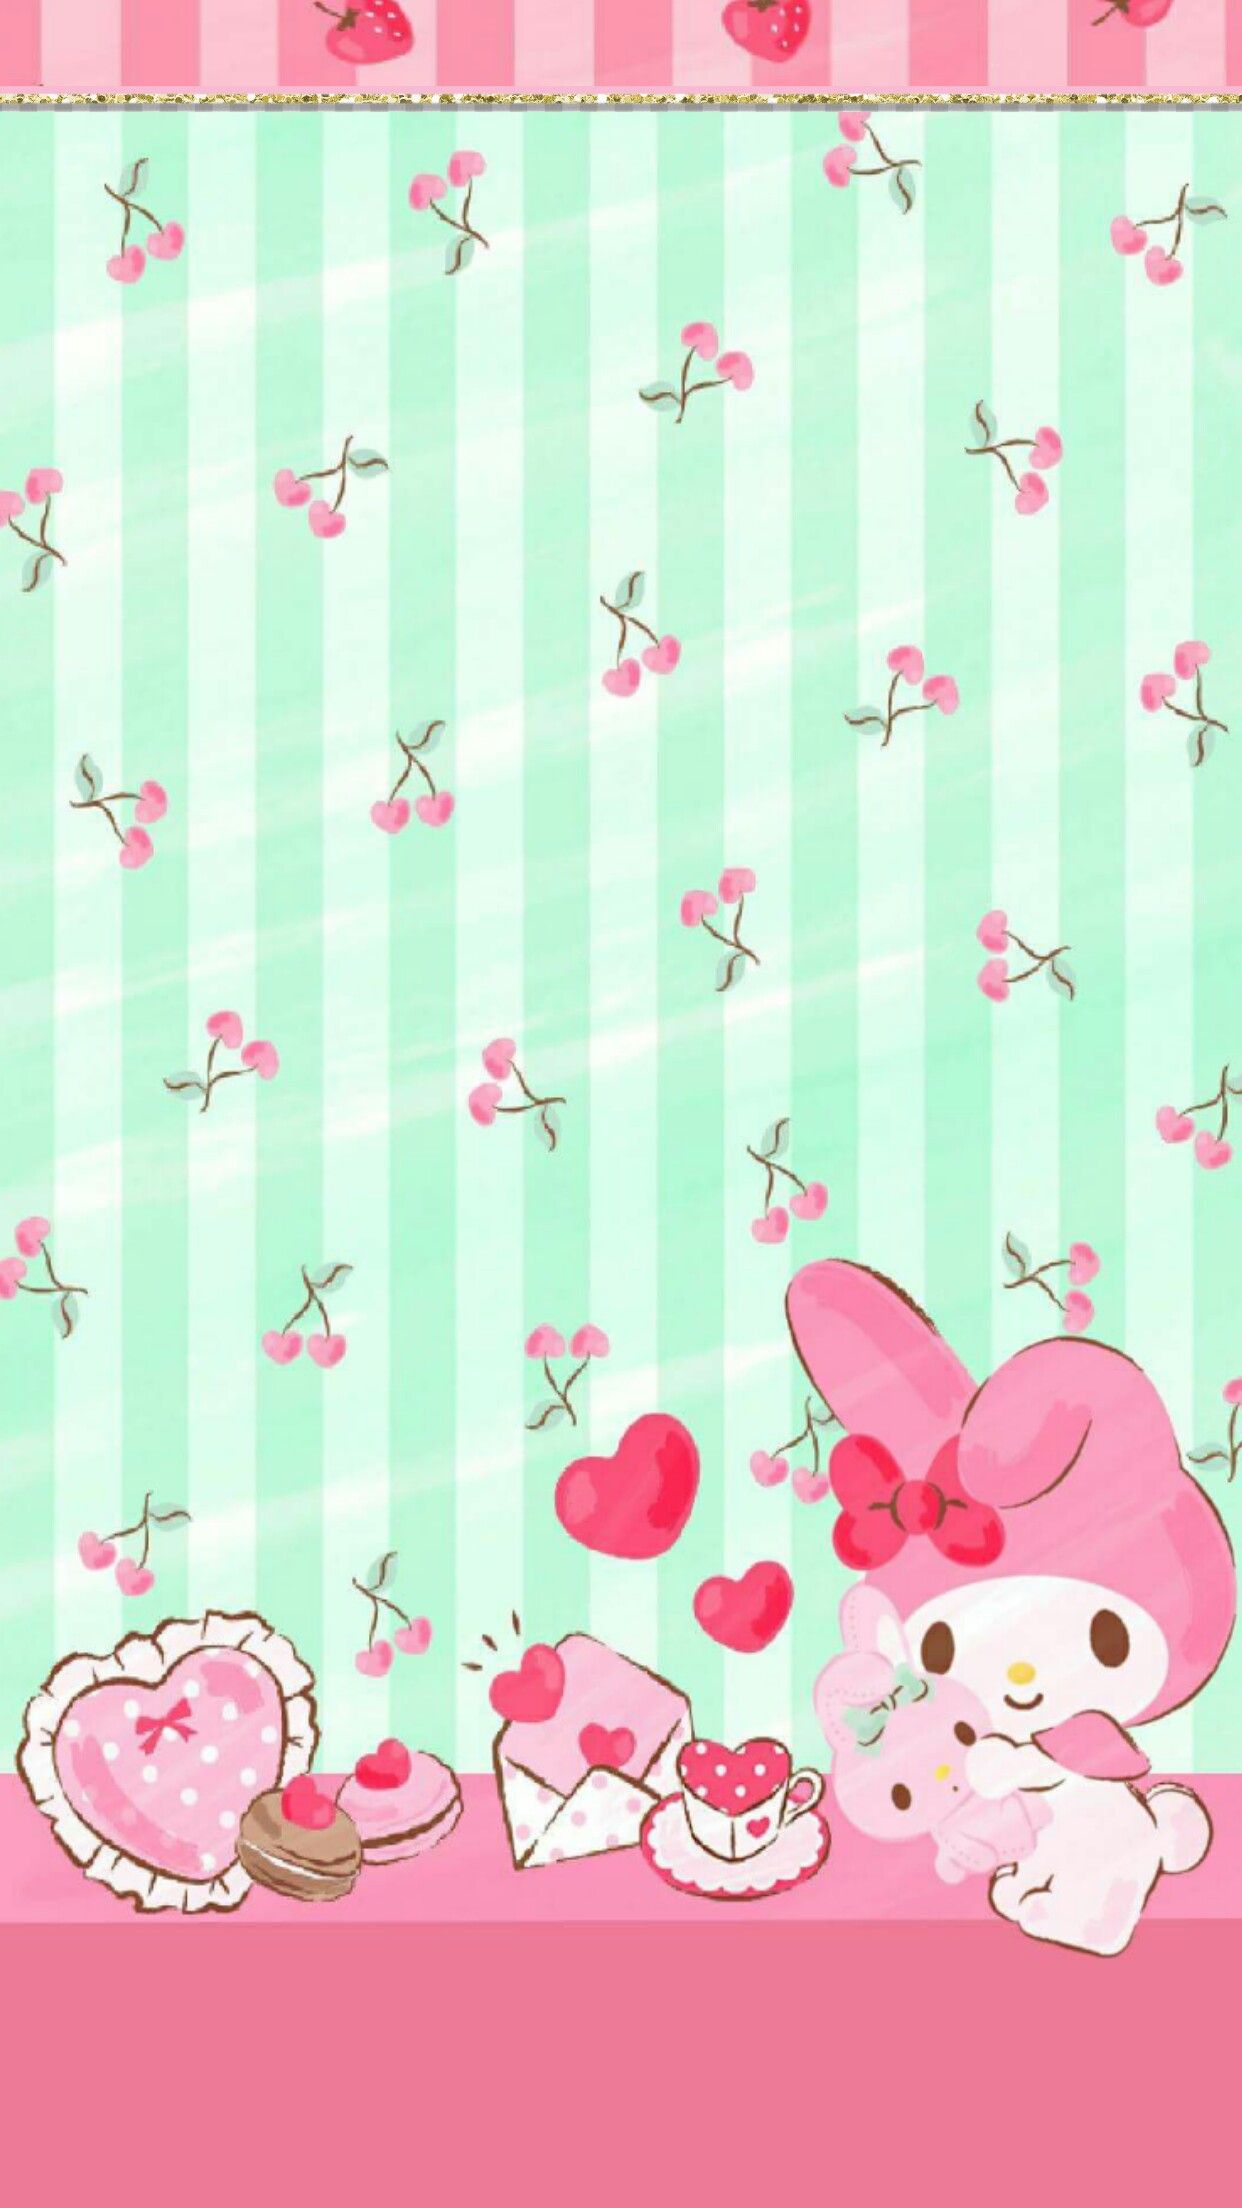 iPhone Wall: Valentine's Day tjn. My melody wallpaper, Sanrio wallpaper, Hello kitty wallpaper